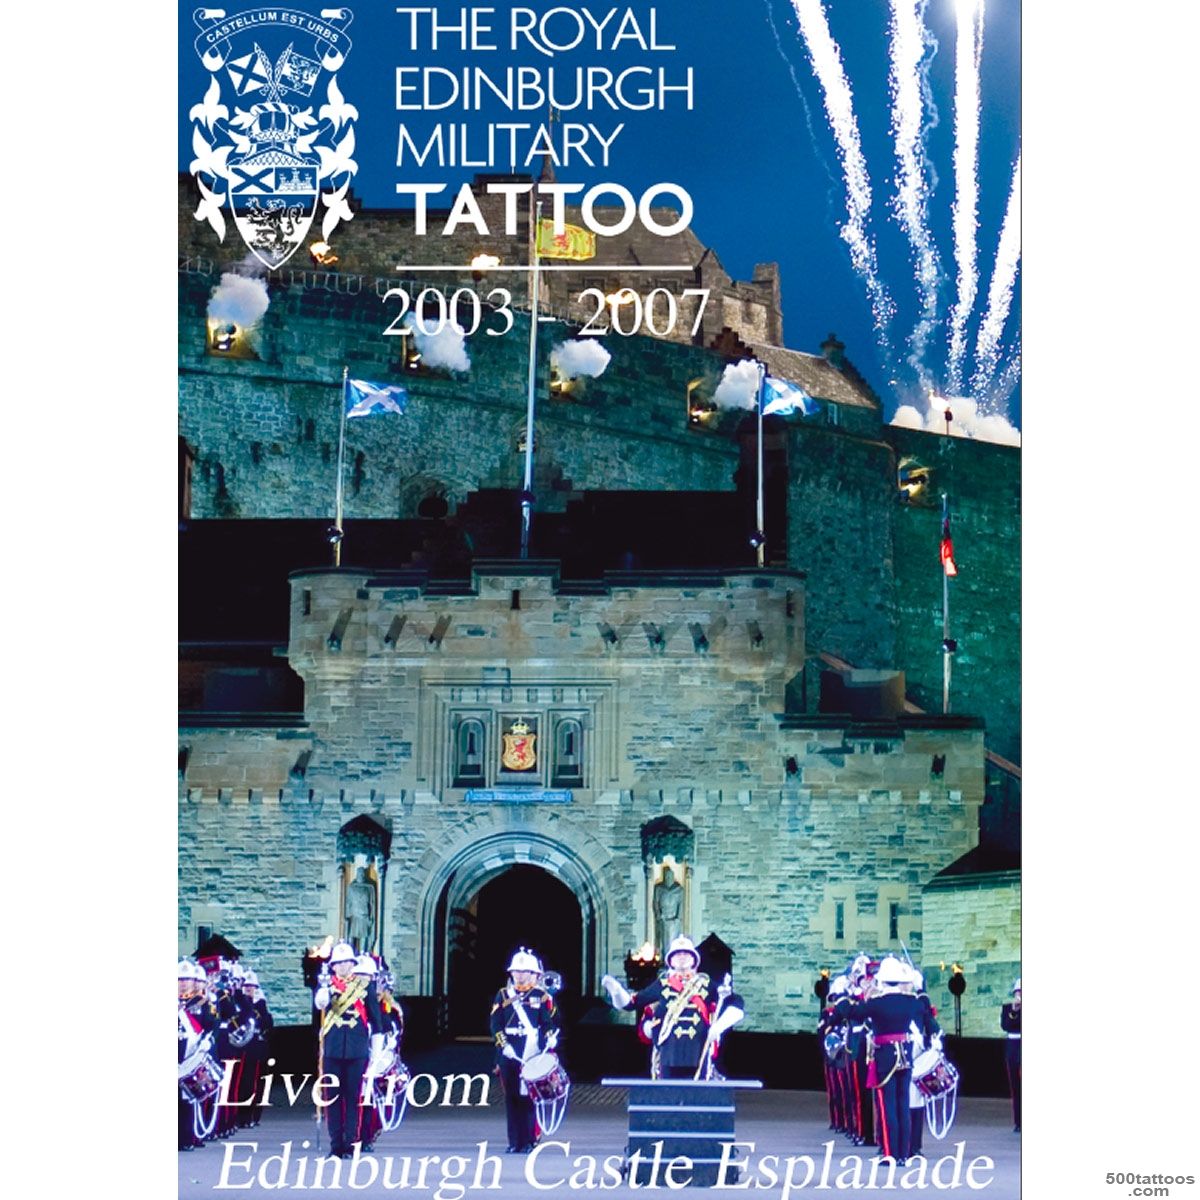 Previous Royal Edinburgh Military Tattoos_29